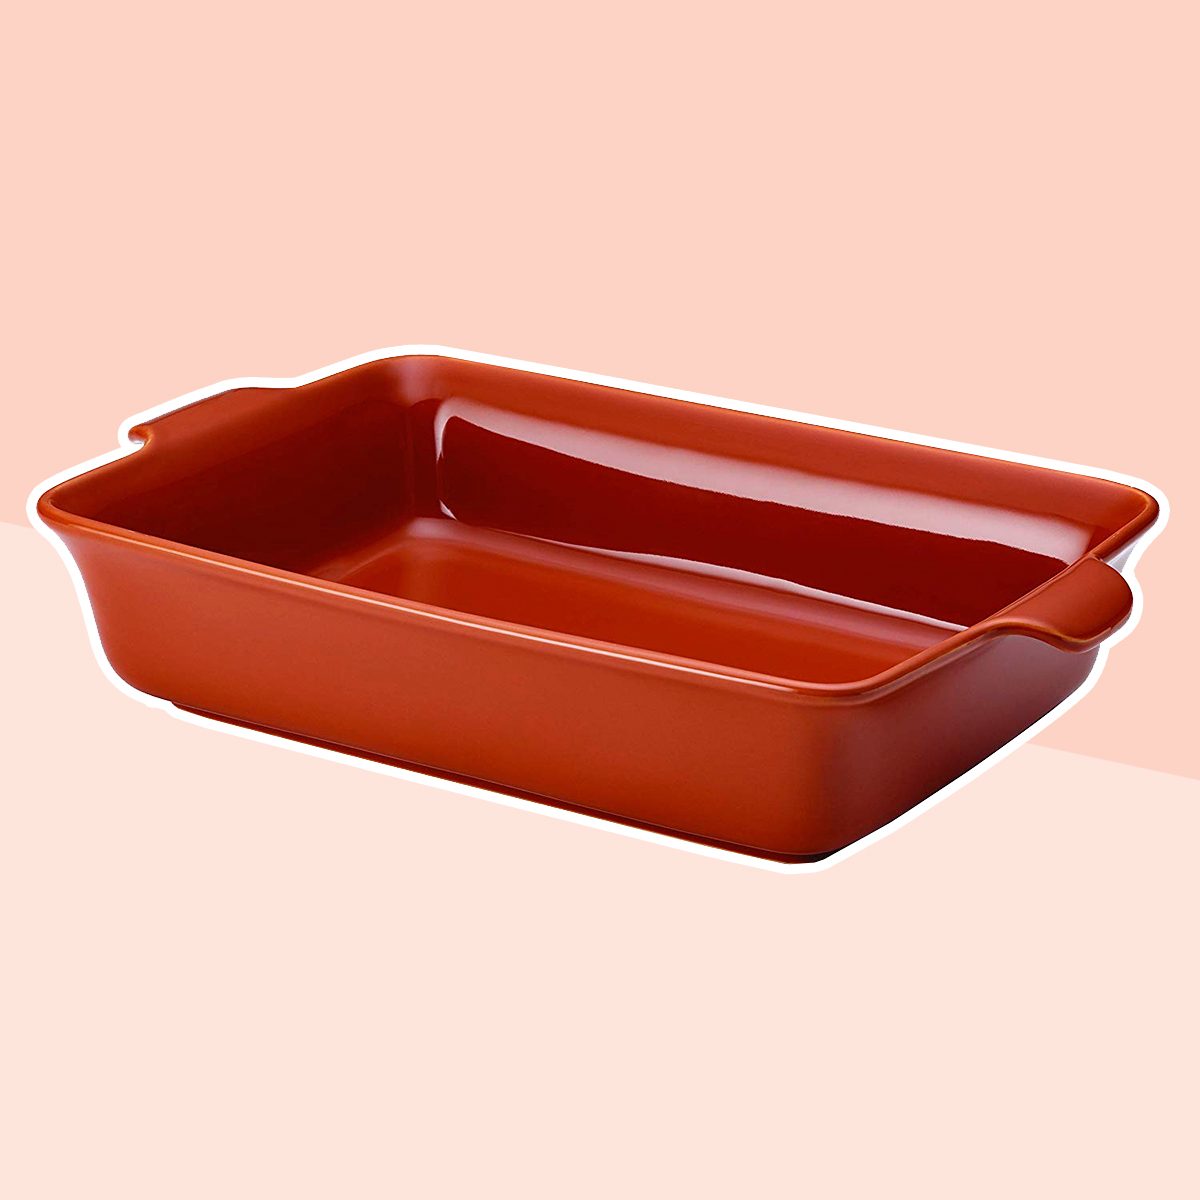 https://www.tasteofhome.com/wp-content/uploads/2019/03/Anolon-Vesta-Ceramics-9-Inch-x-13-Inch-Rectangular-Baker-Persimmon-Orange-.jpg?fit=700%2C700